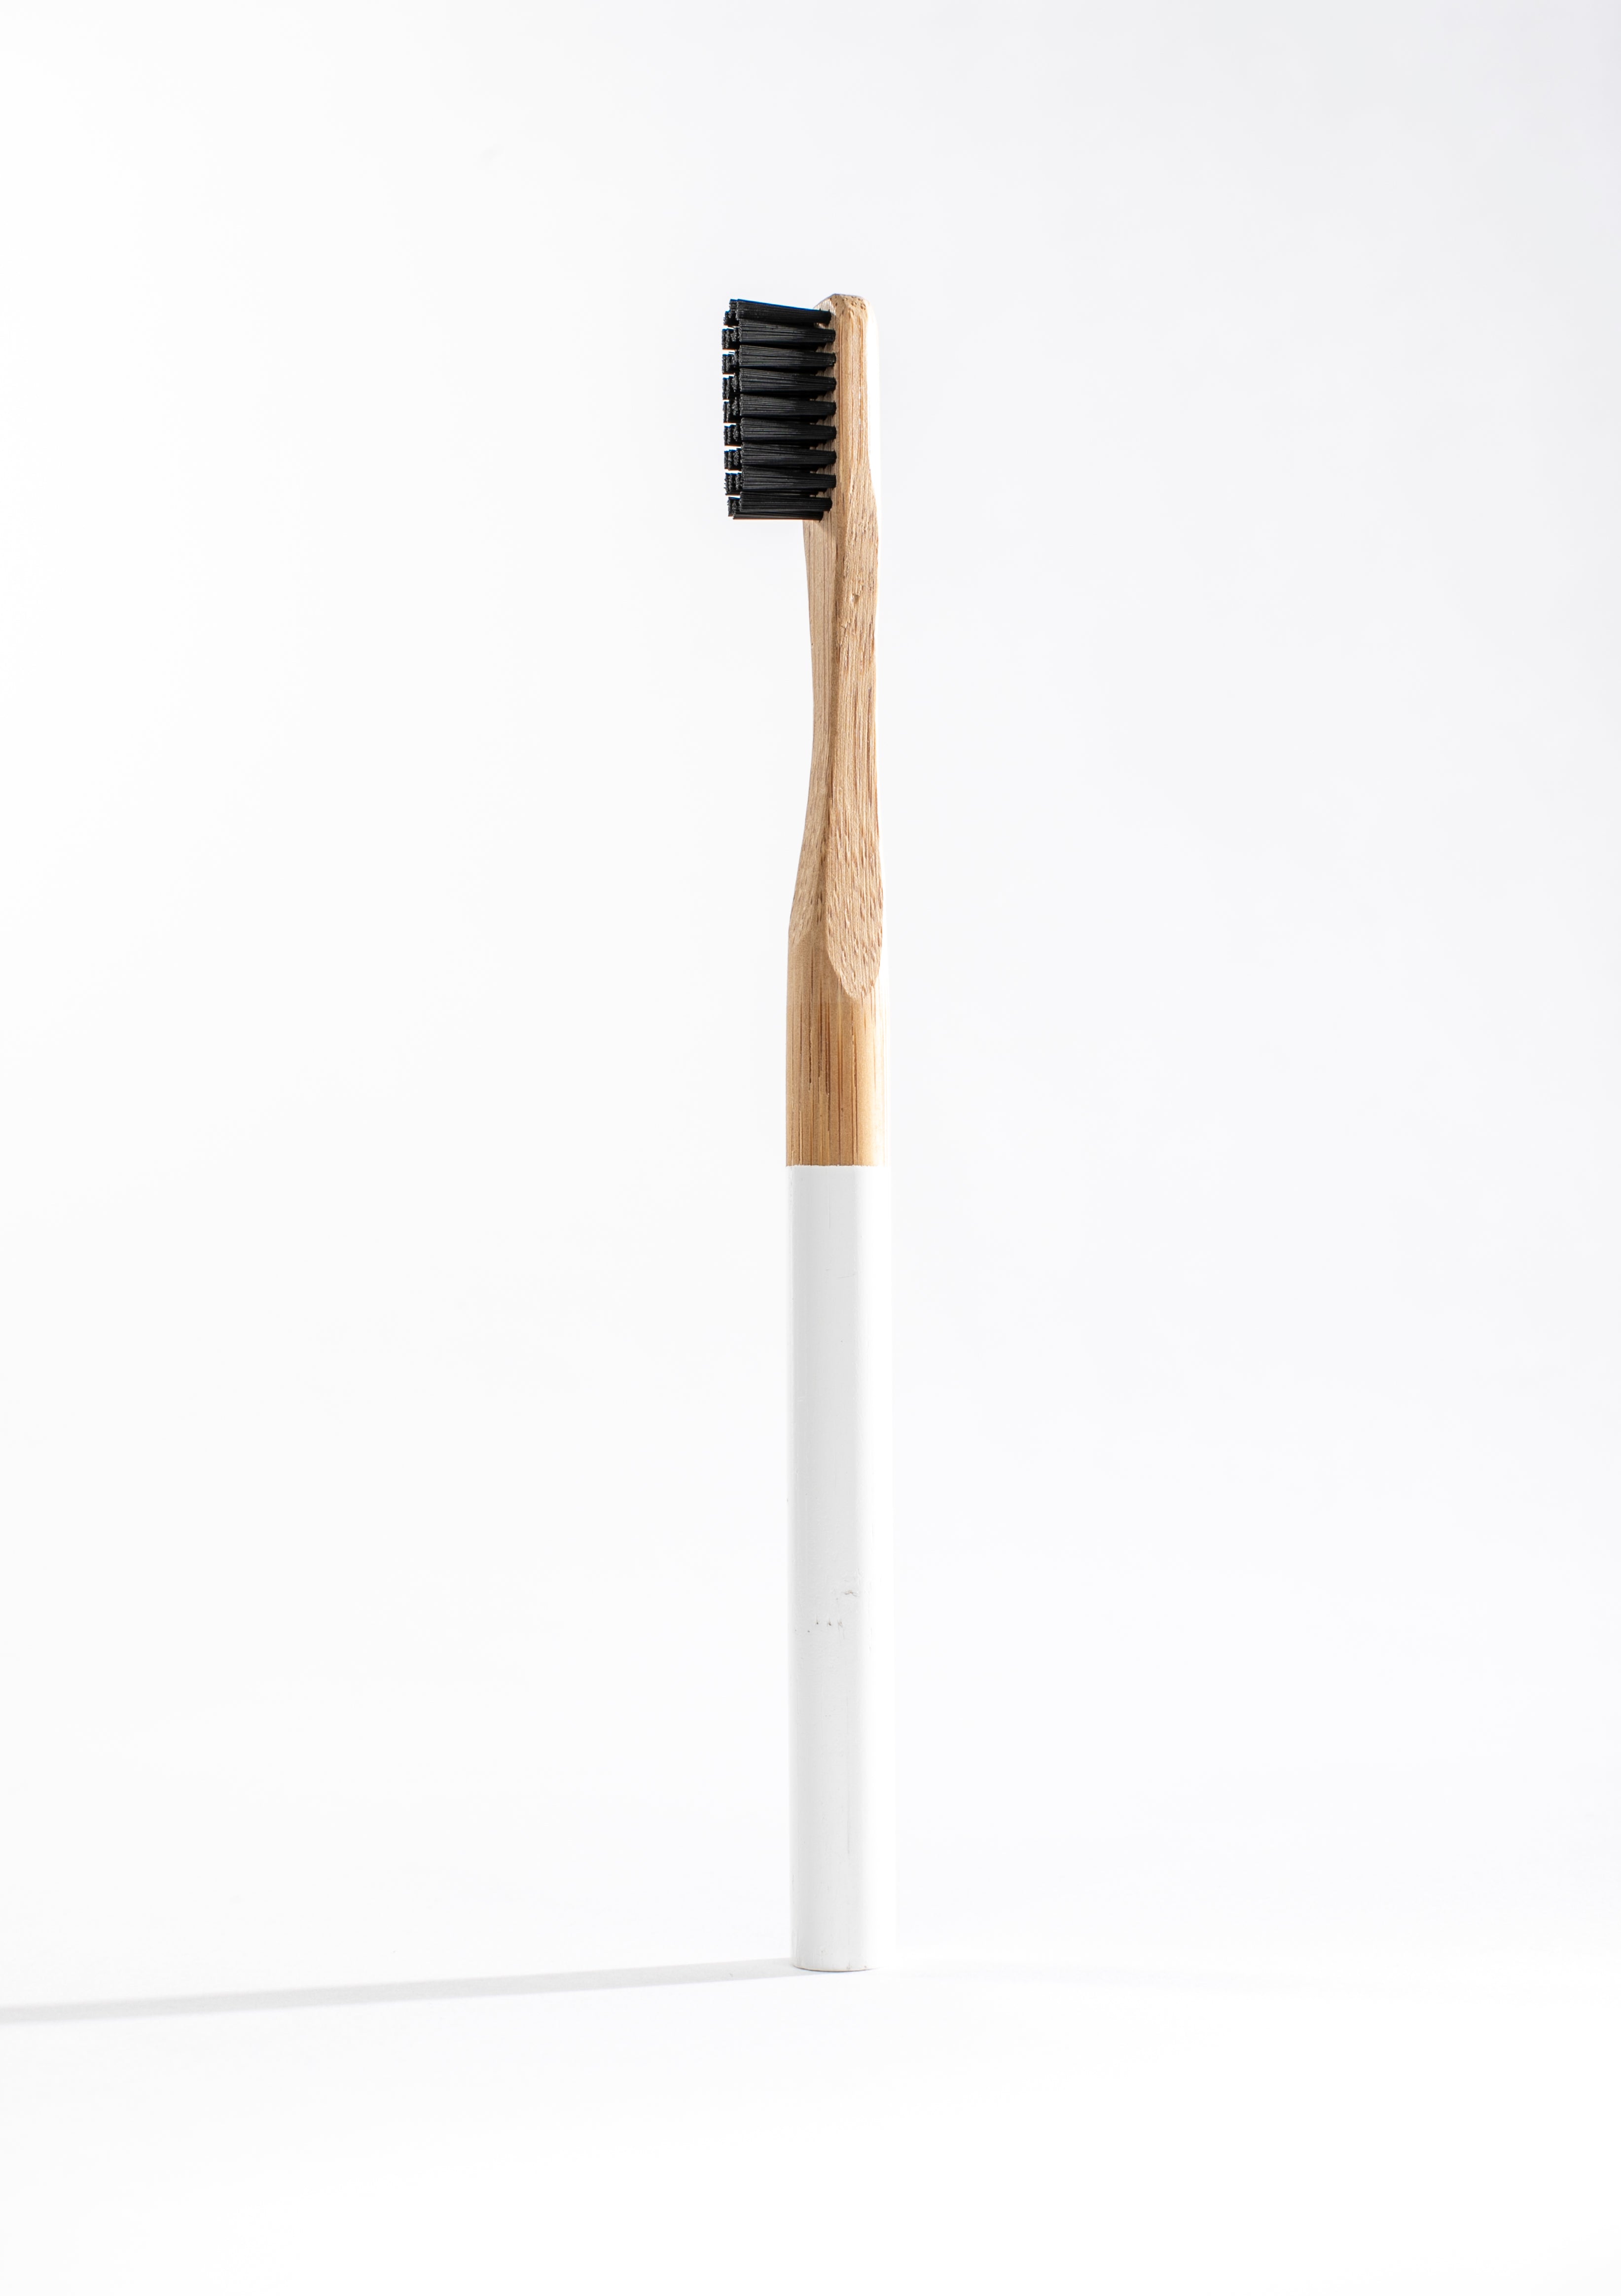 Terra & Co., Brilliant Black Bamboo Toothbrush, 1 ea